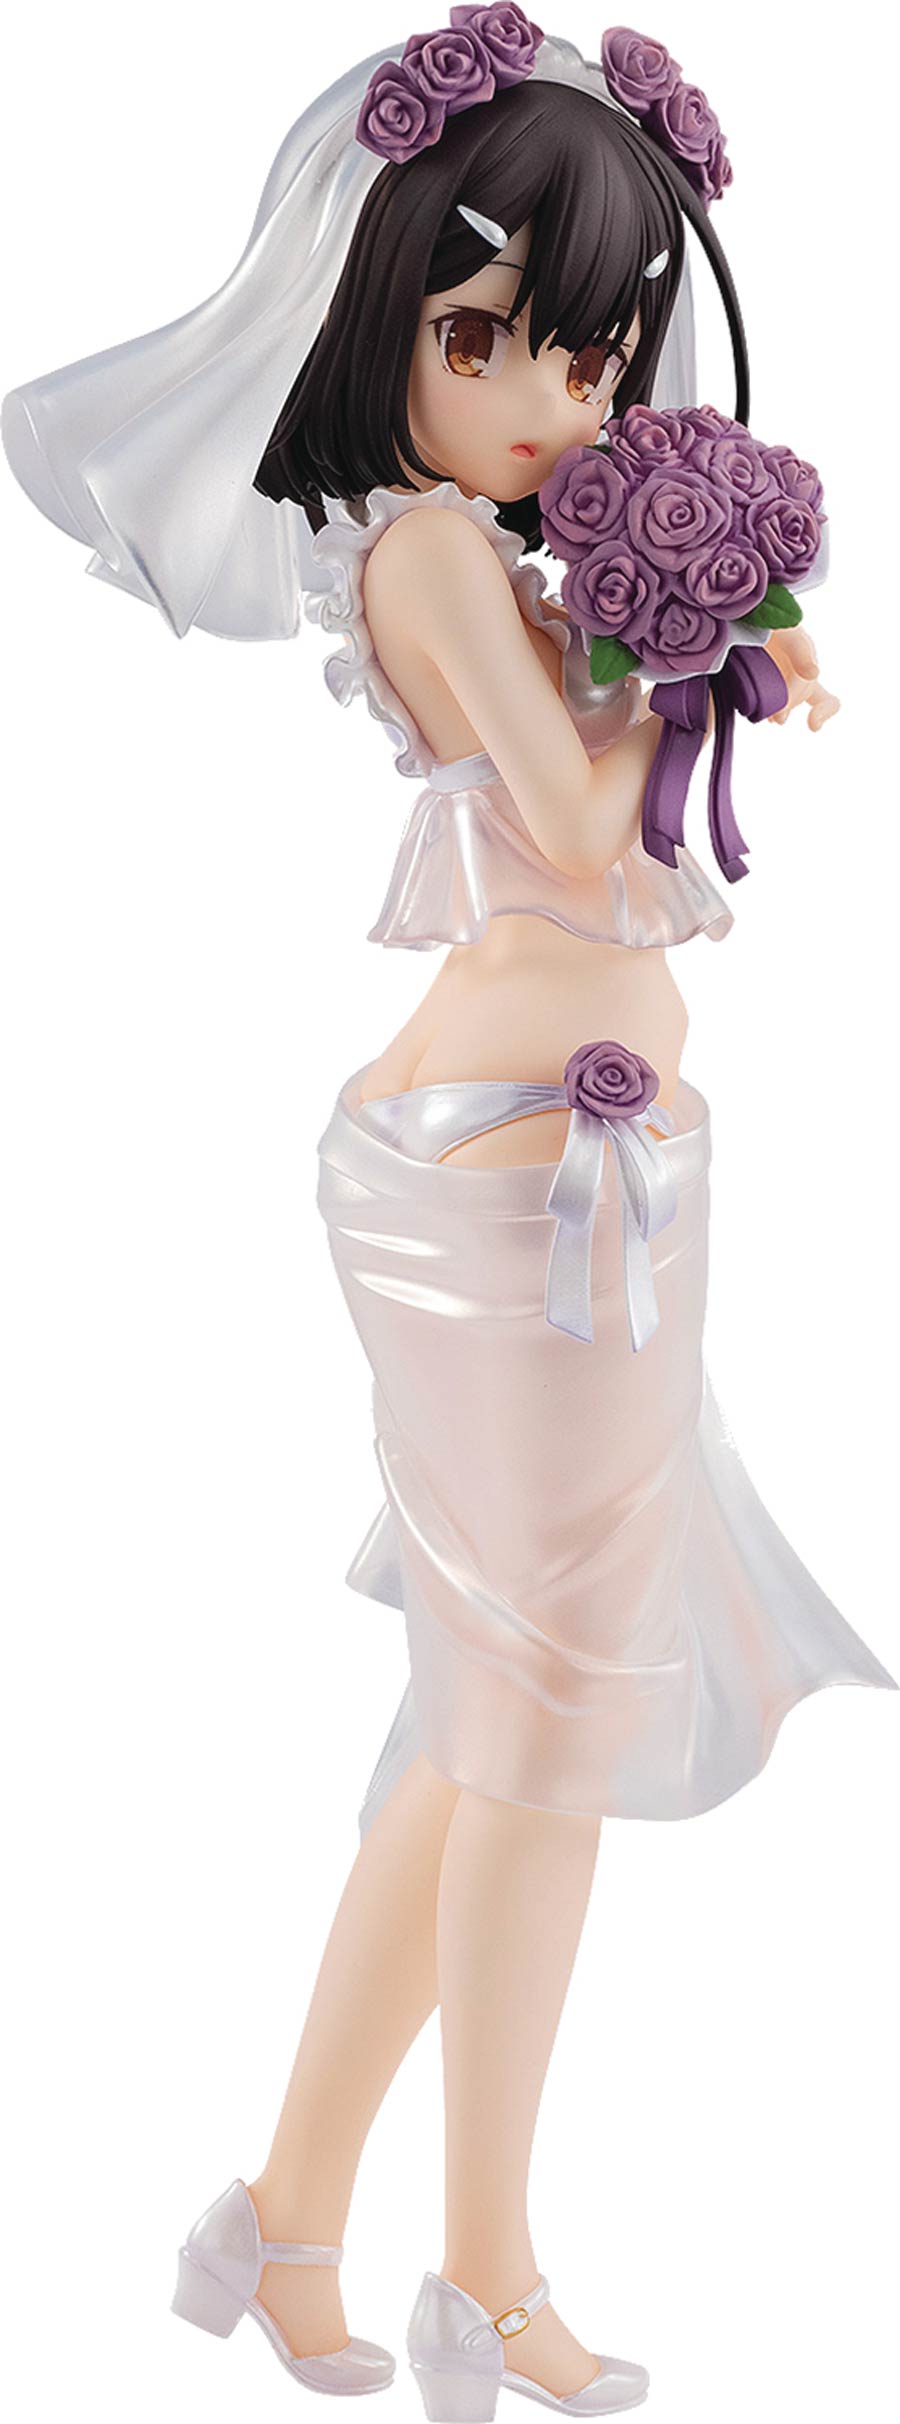 Fate/Kaleid Liner Prisma Illya Miyu Edelfelt Wedding Bikini 1/7 Scale PVC Figure